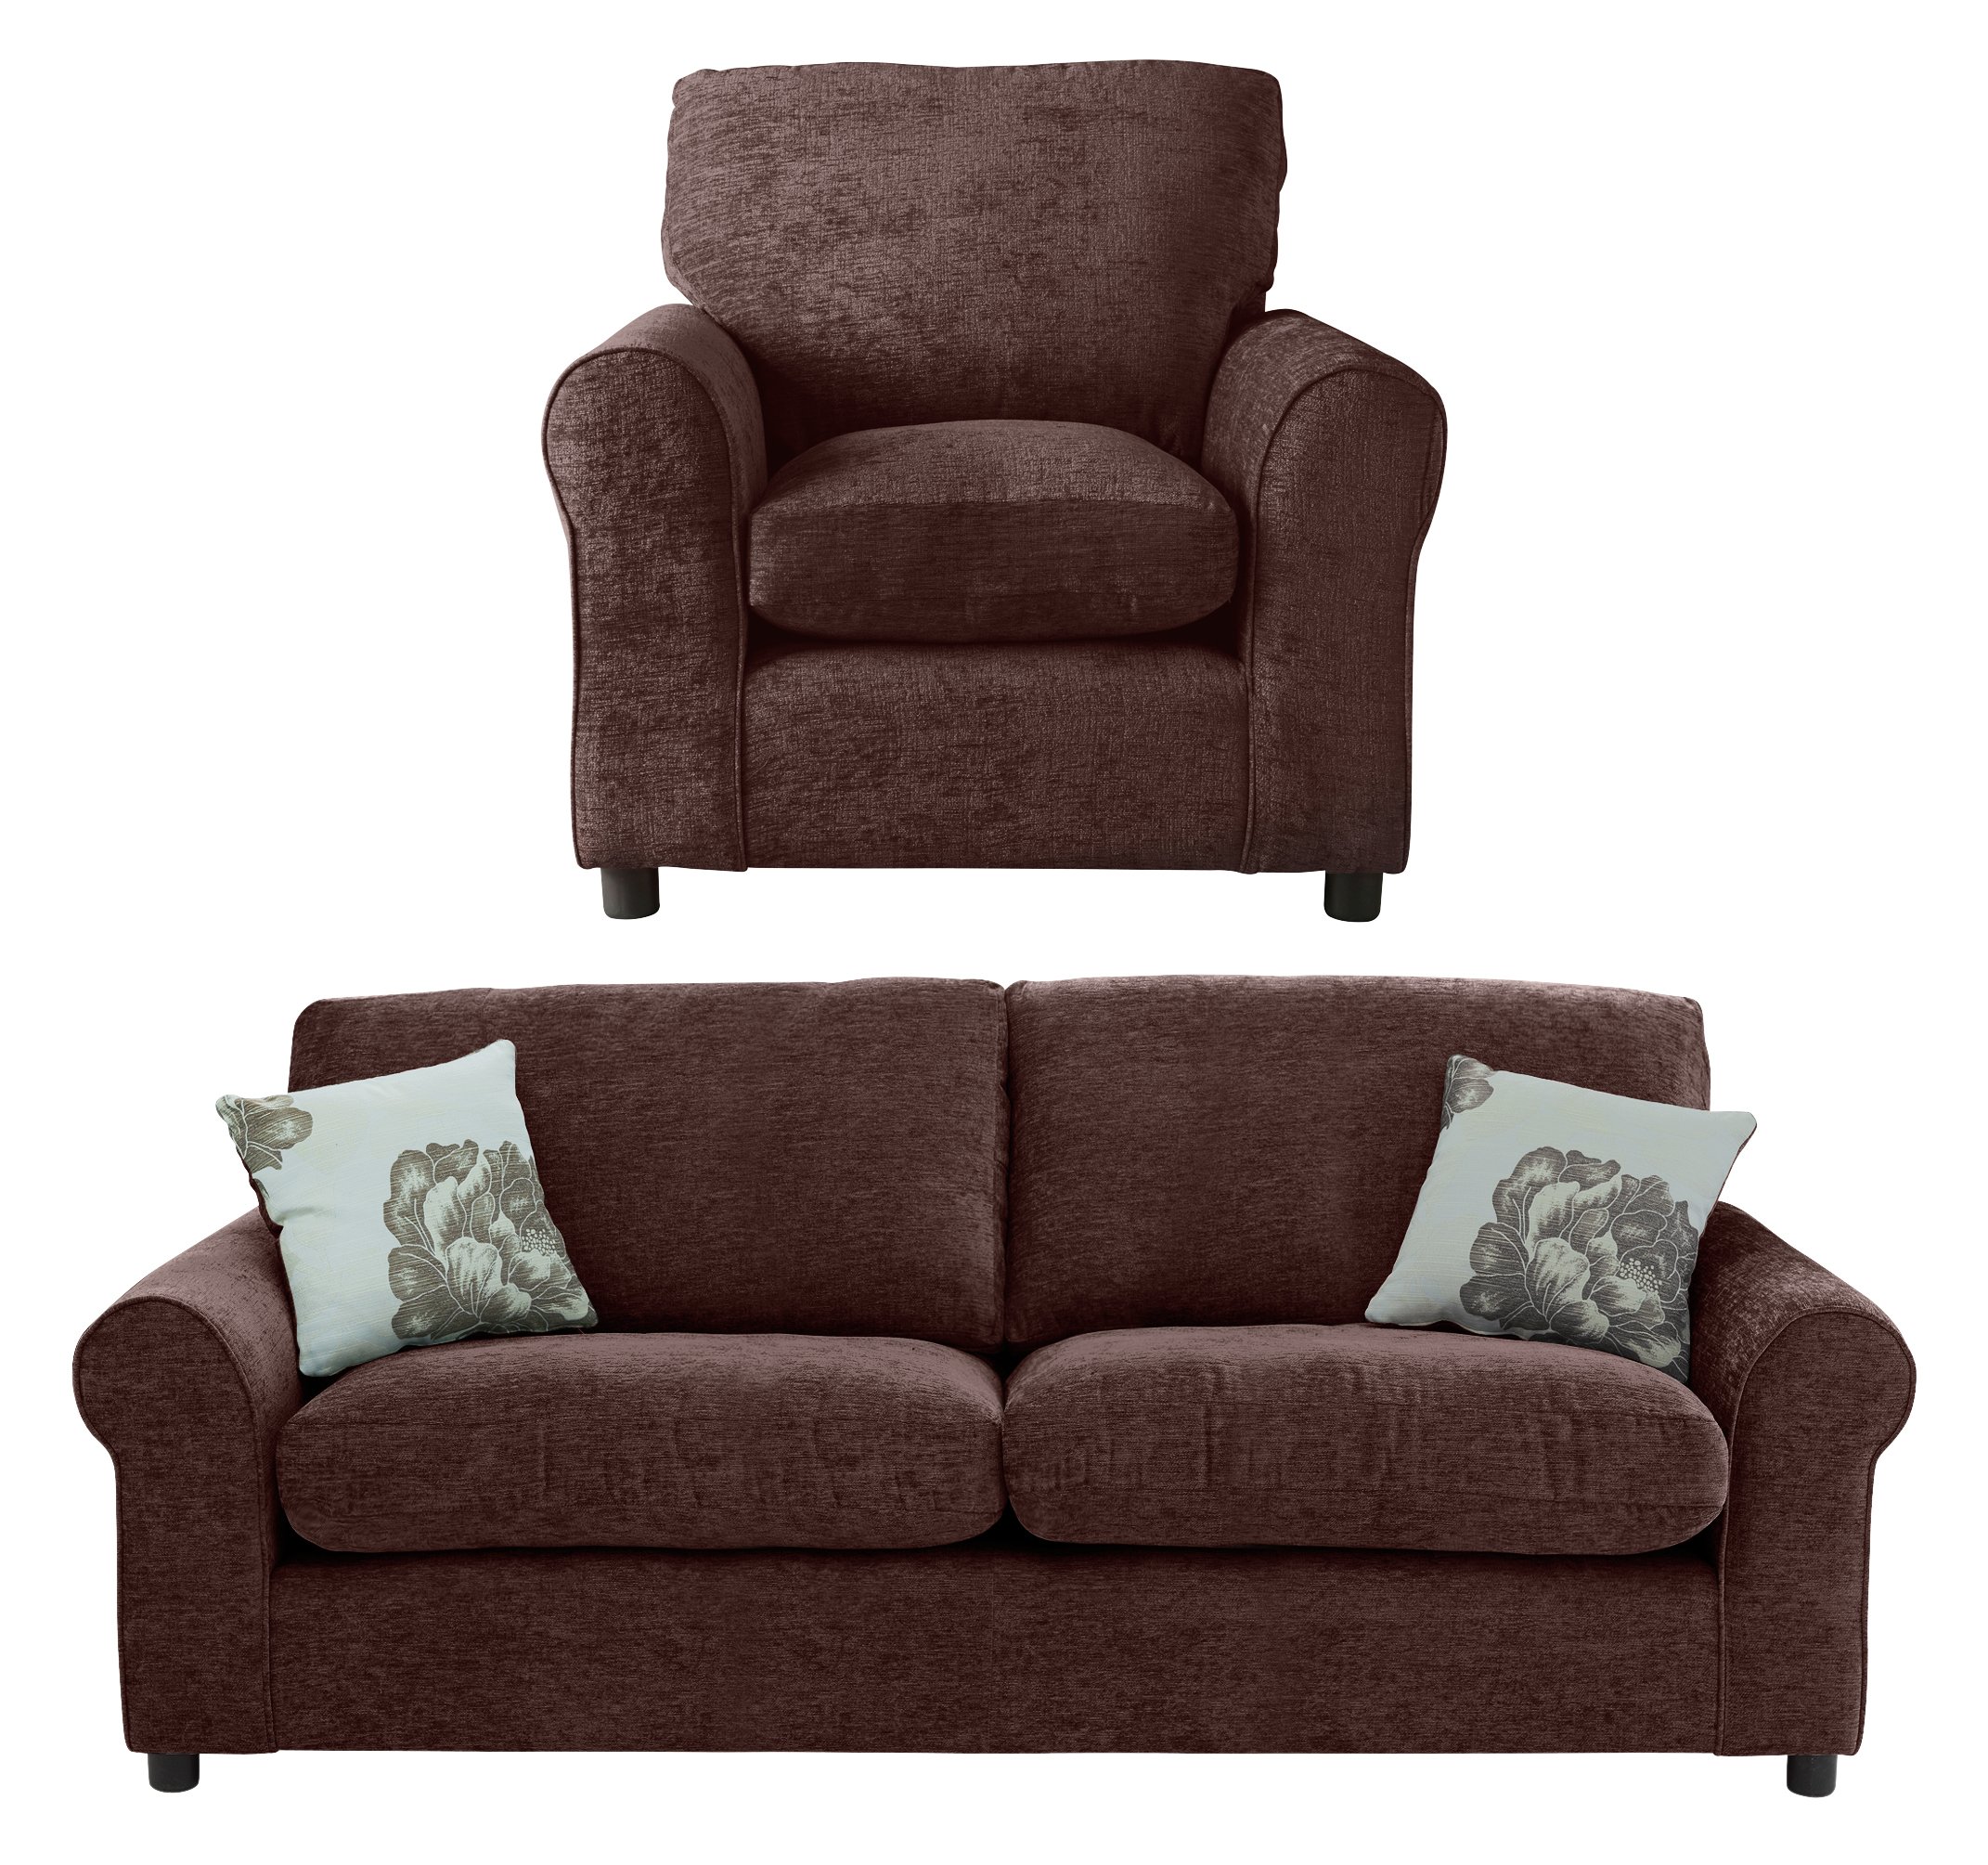 Argos Home Tessa Fabric 3 Seater Sofa and Chair - Chocolate